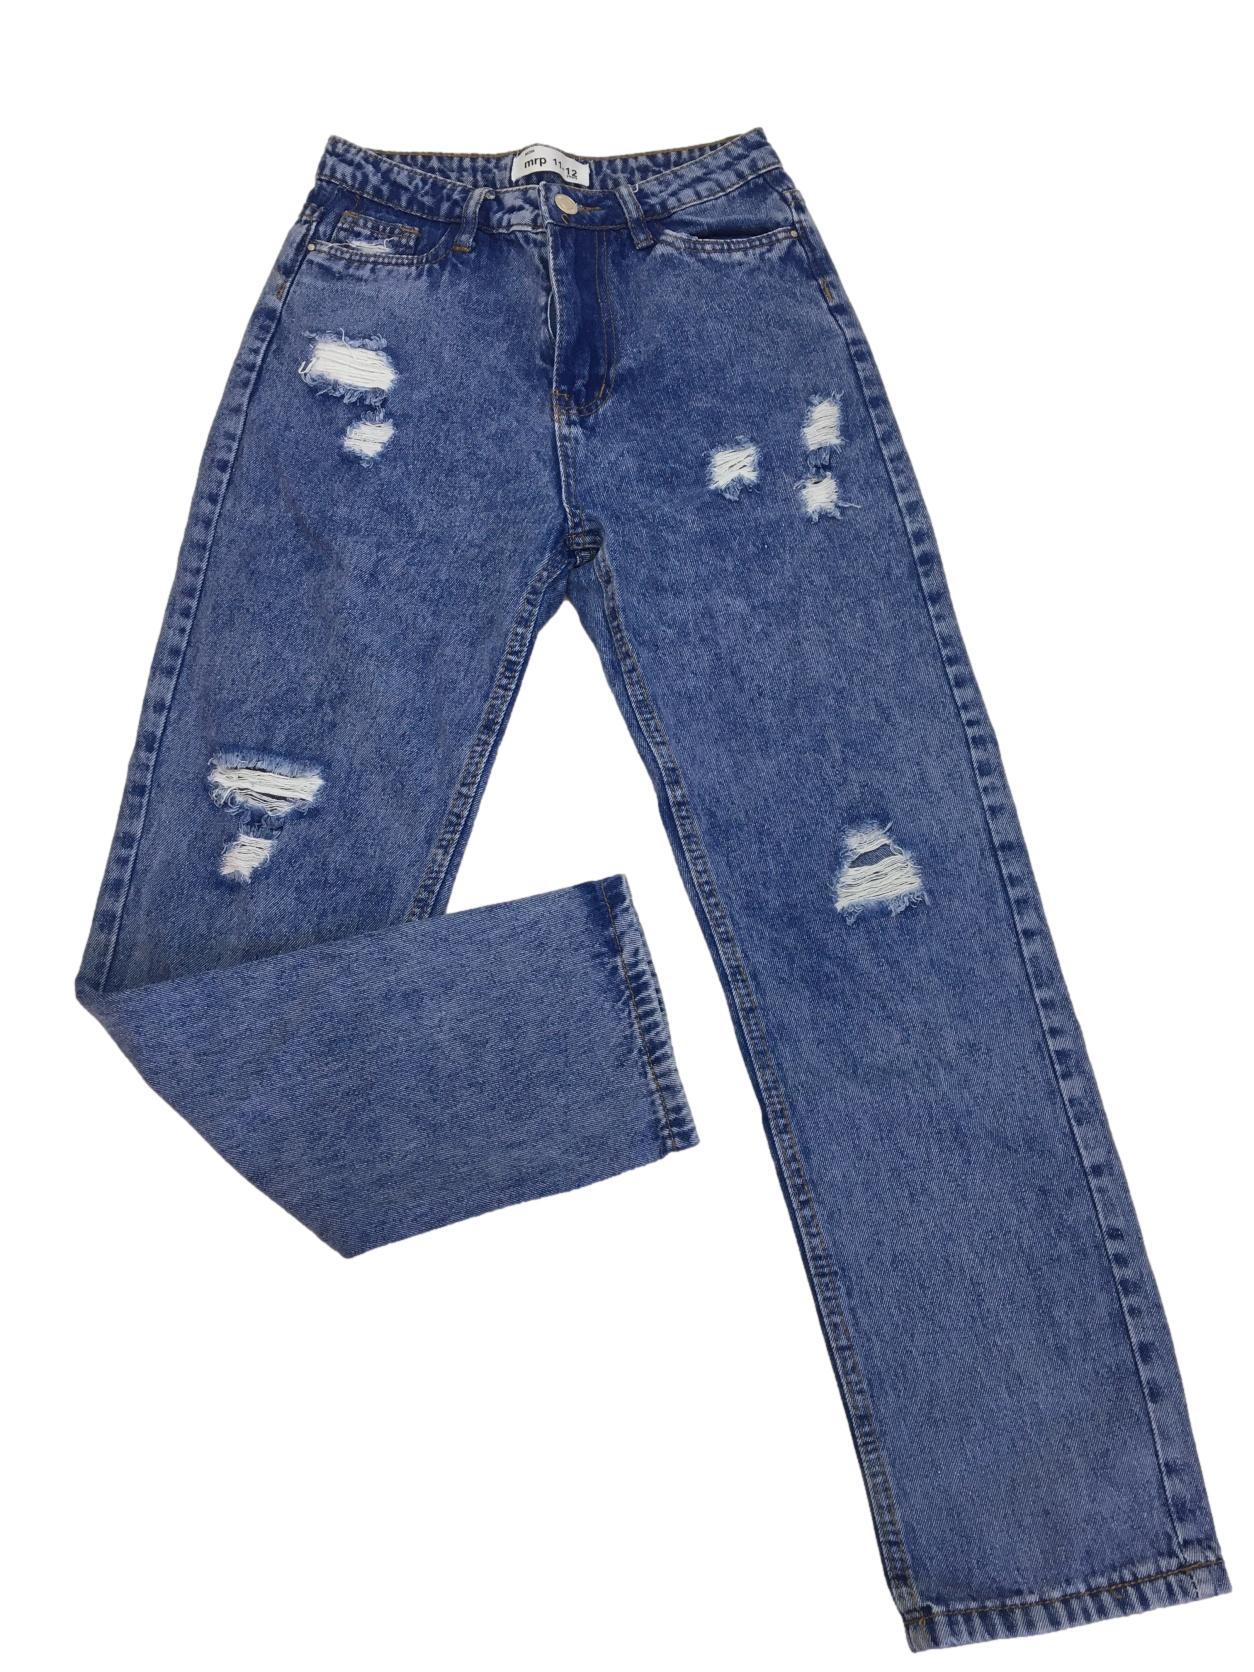 11-12Y Light Blue Distressed Mom Jeans - Mr Price - Petit Fox